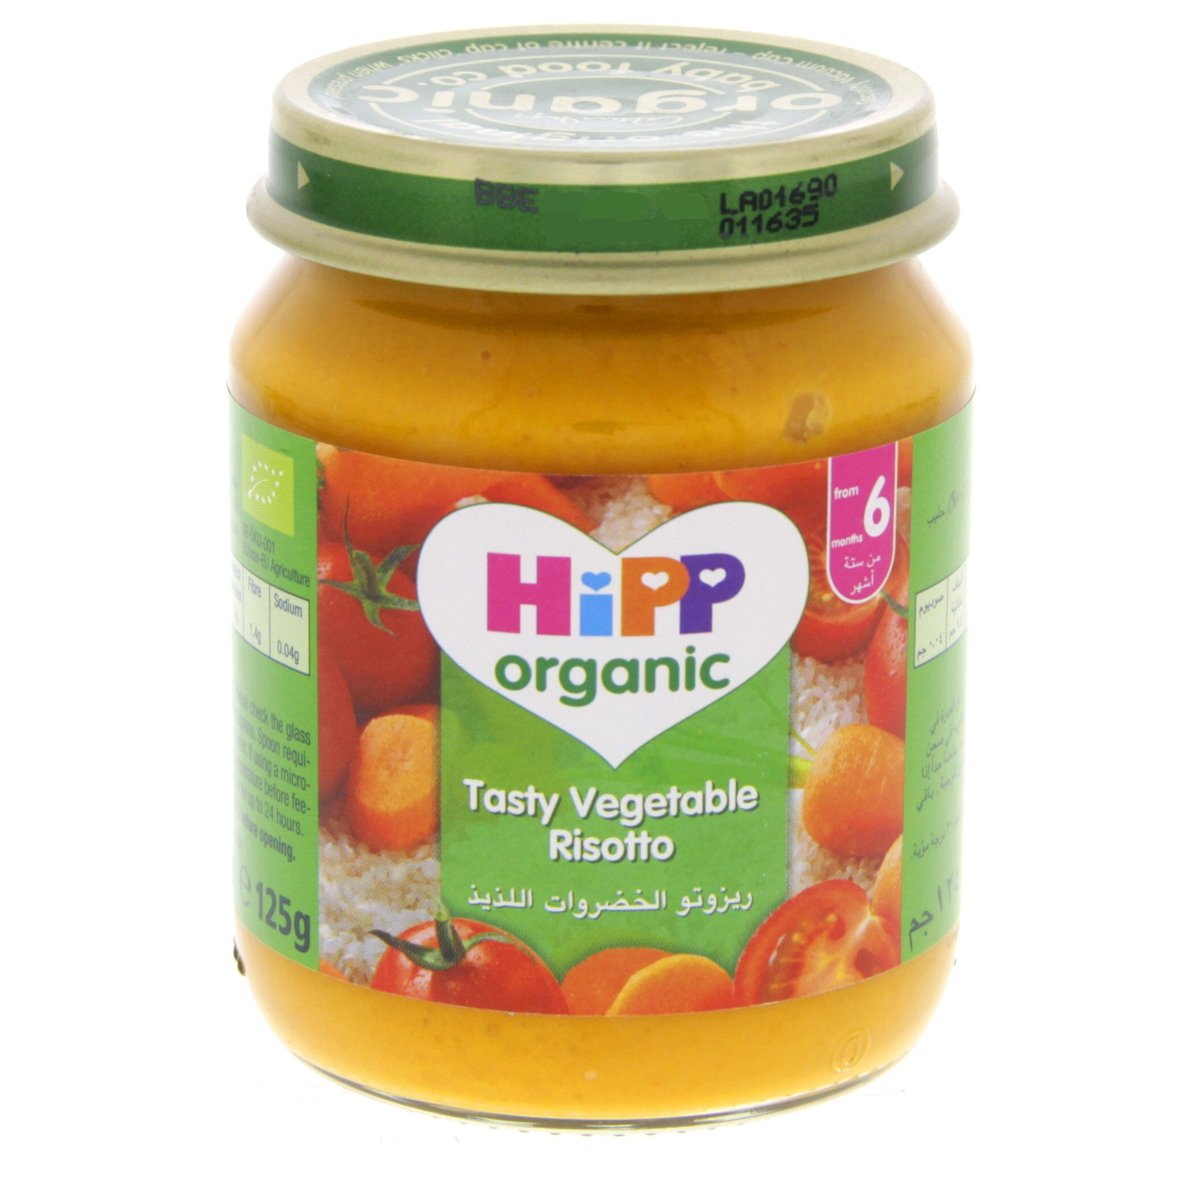 Hipp Organic Tasty Vegetable Risotto 125 g